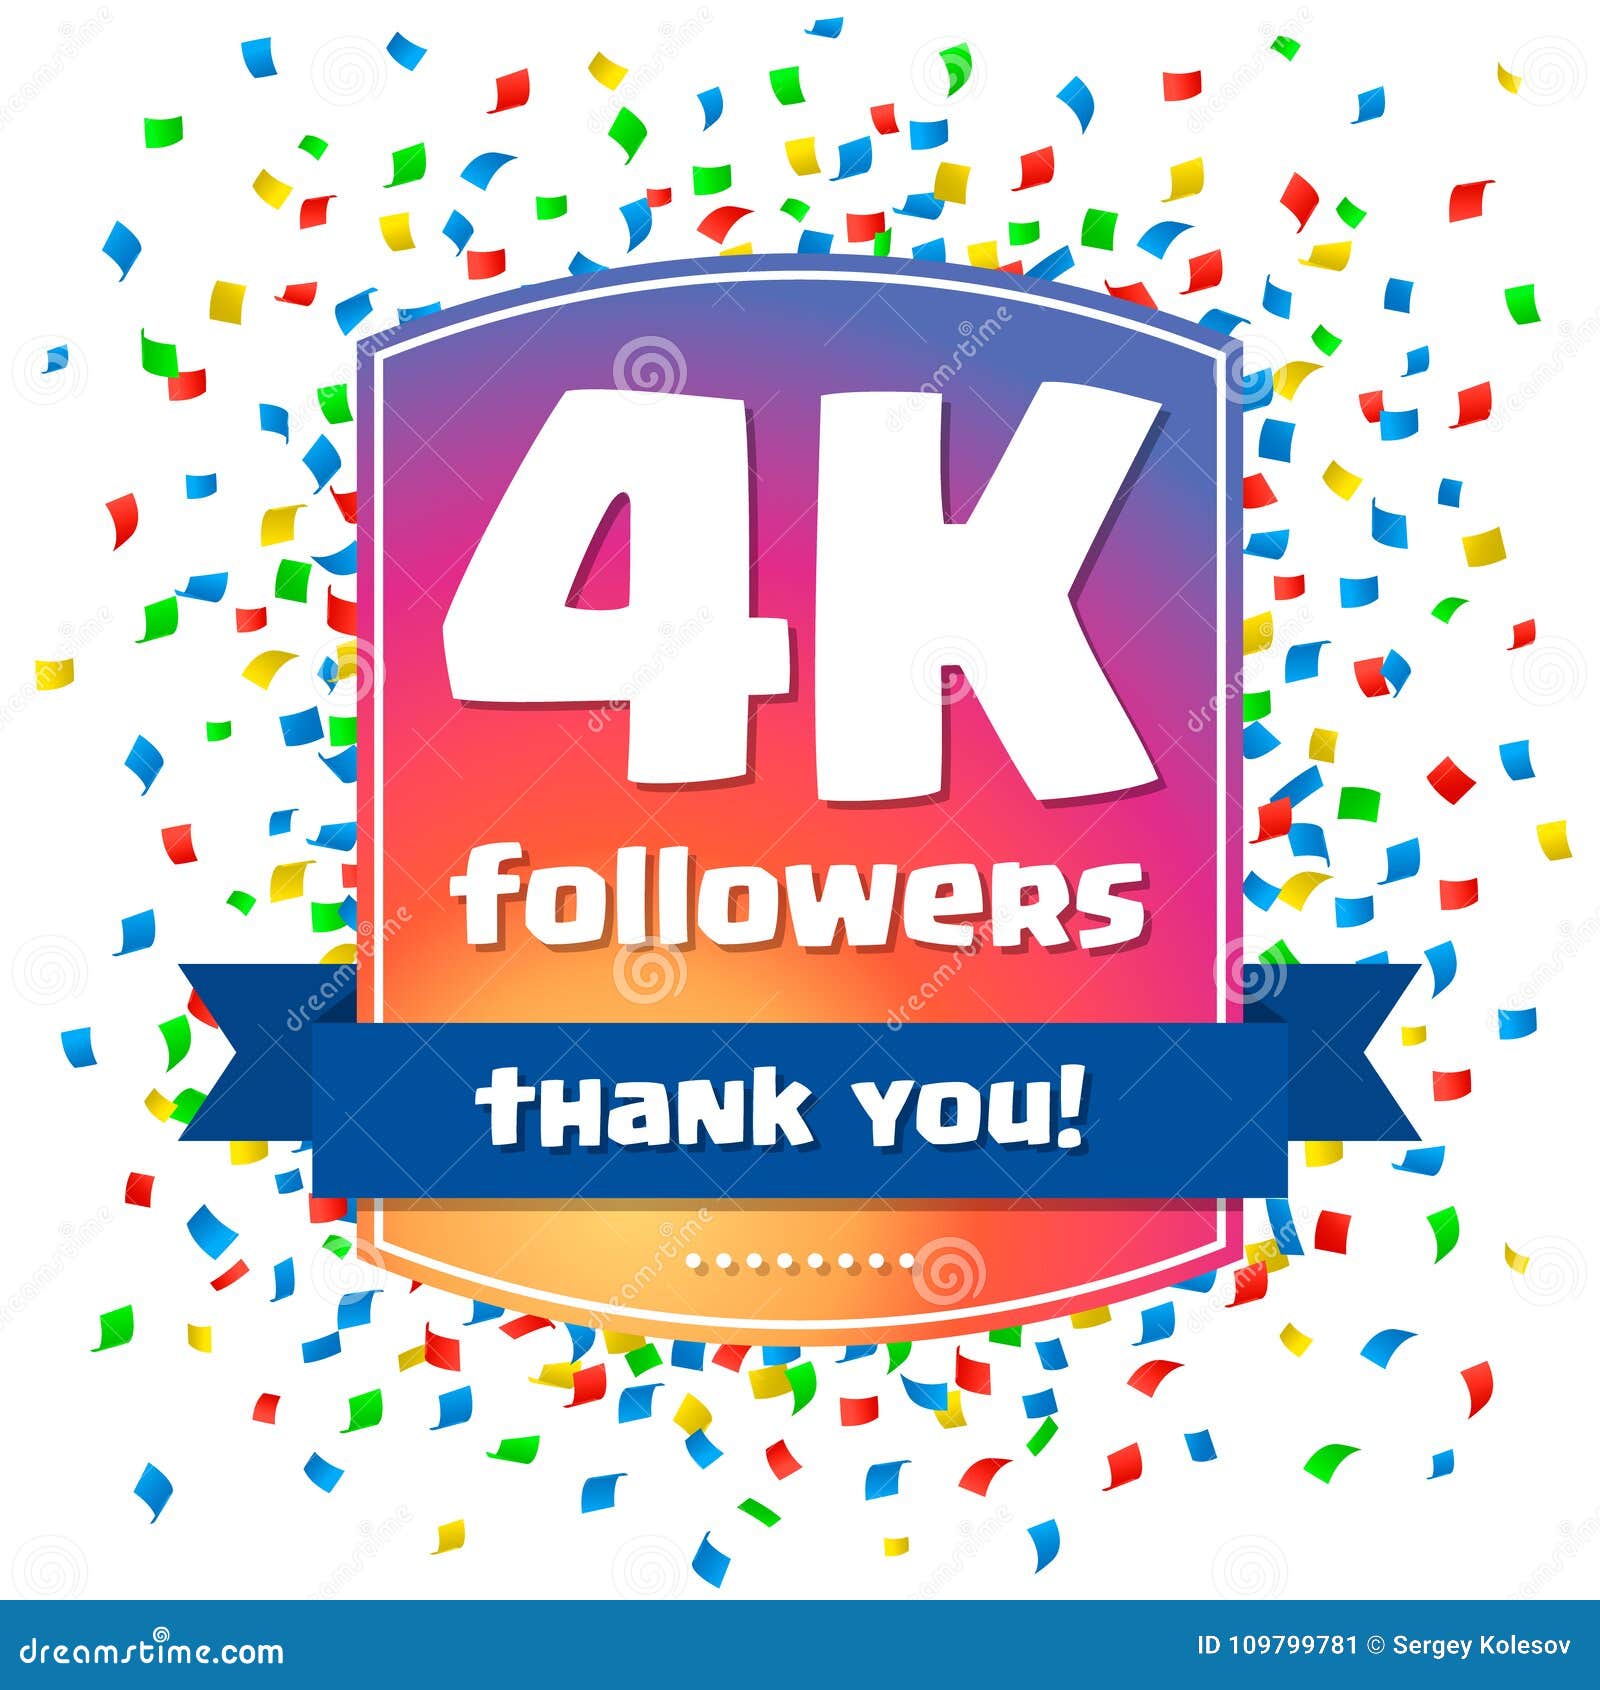 4000 followers thank you design card - instagram followers 4k